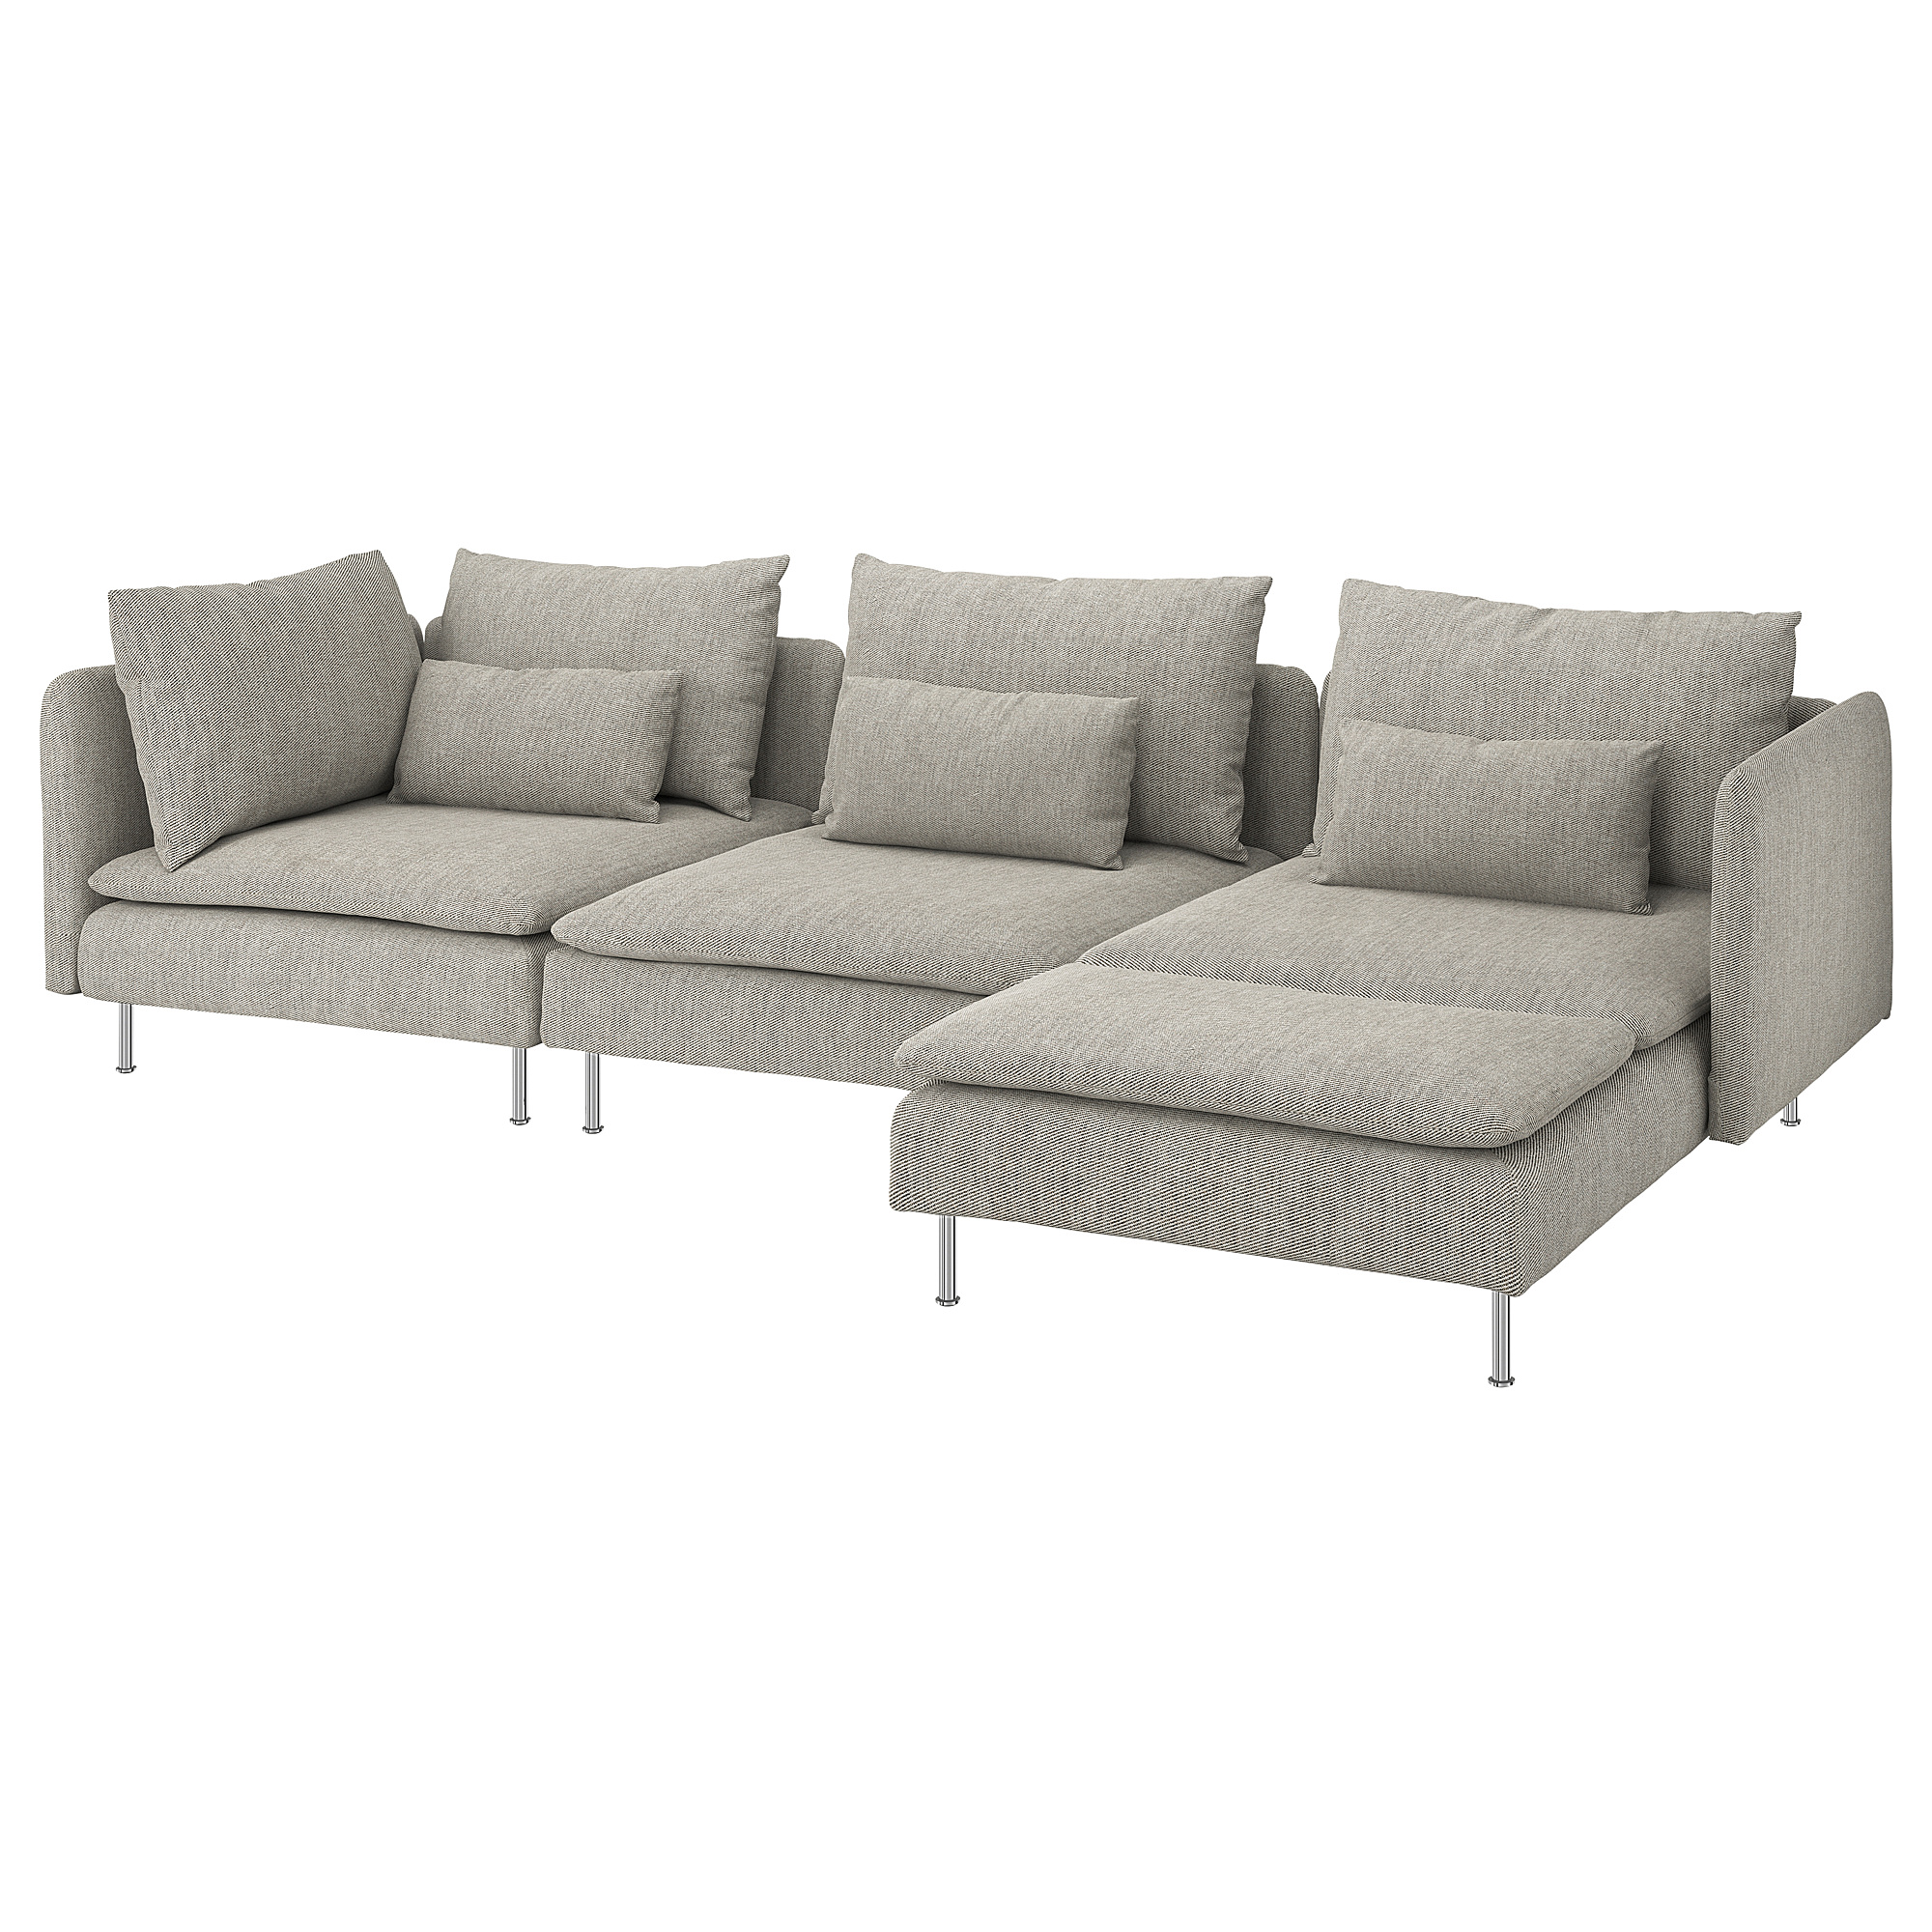 SÖDERHAMN 4-seat sofa